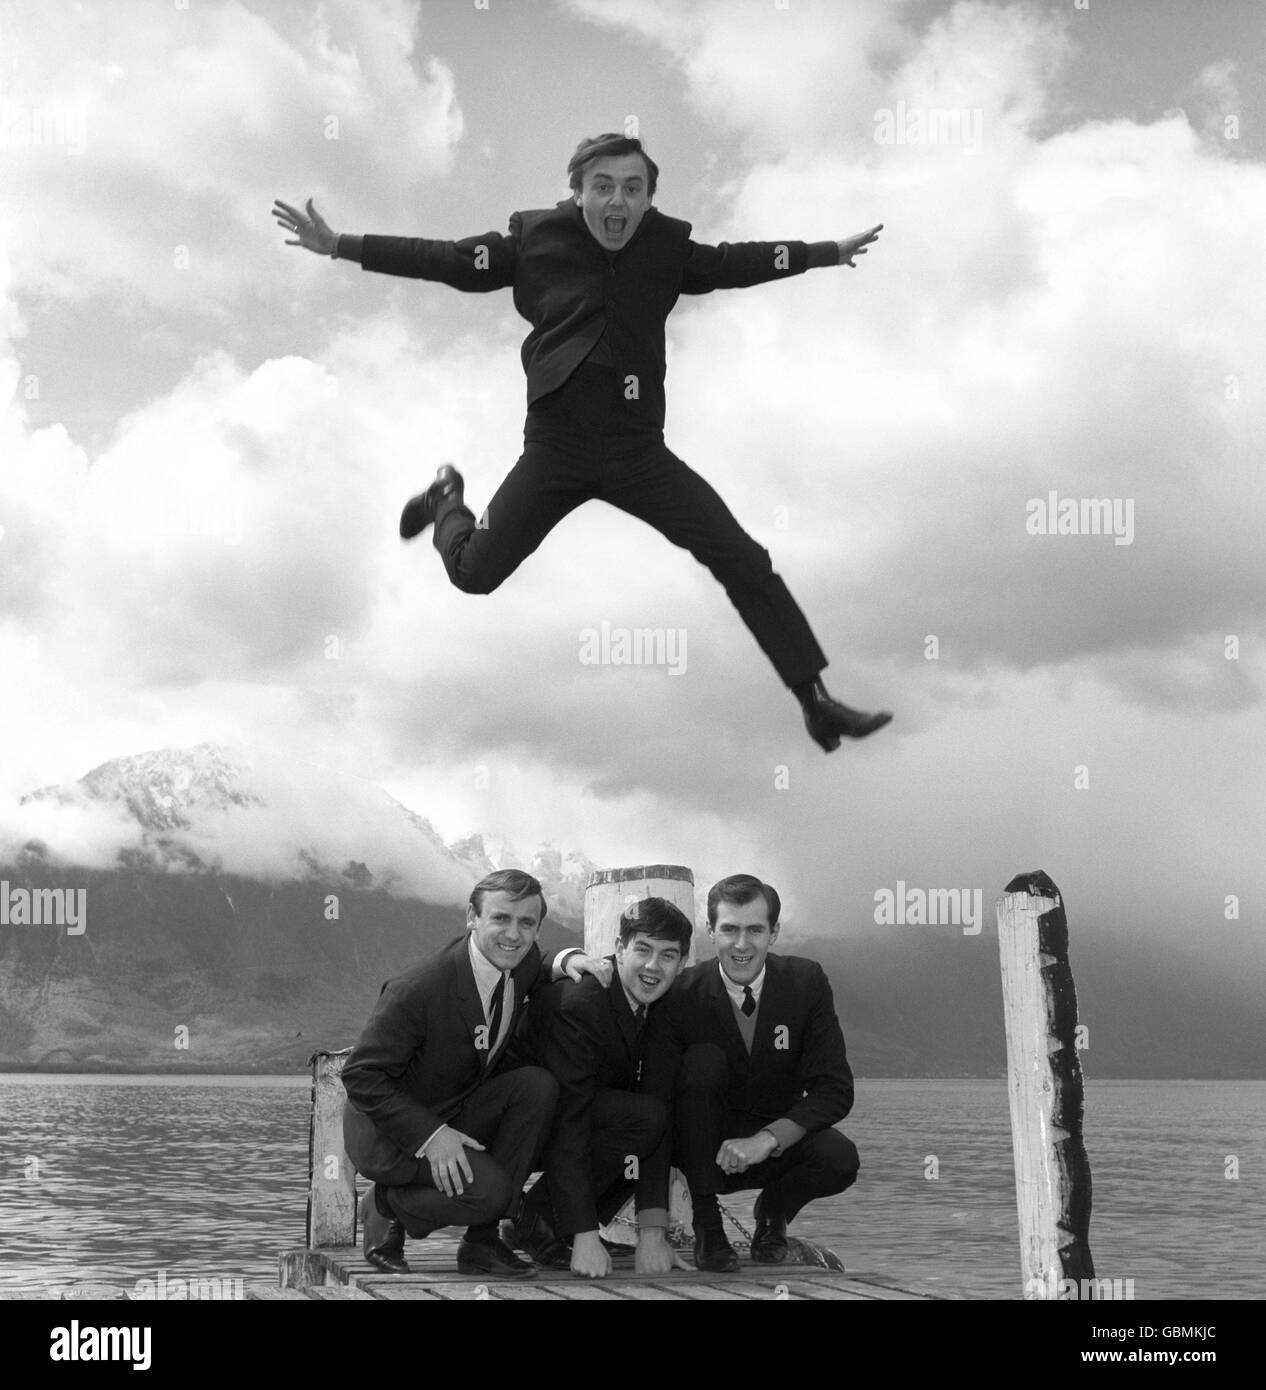 Musica - Gerry e il pacemaker - Montreux - 1964 Foto Stock